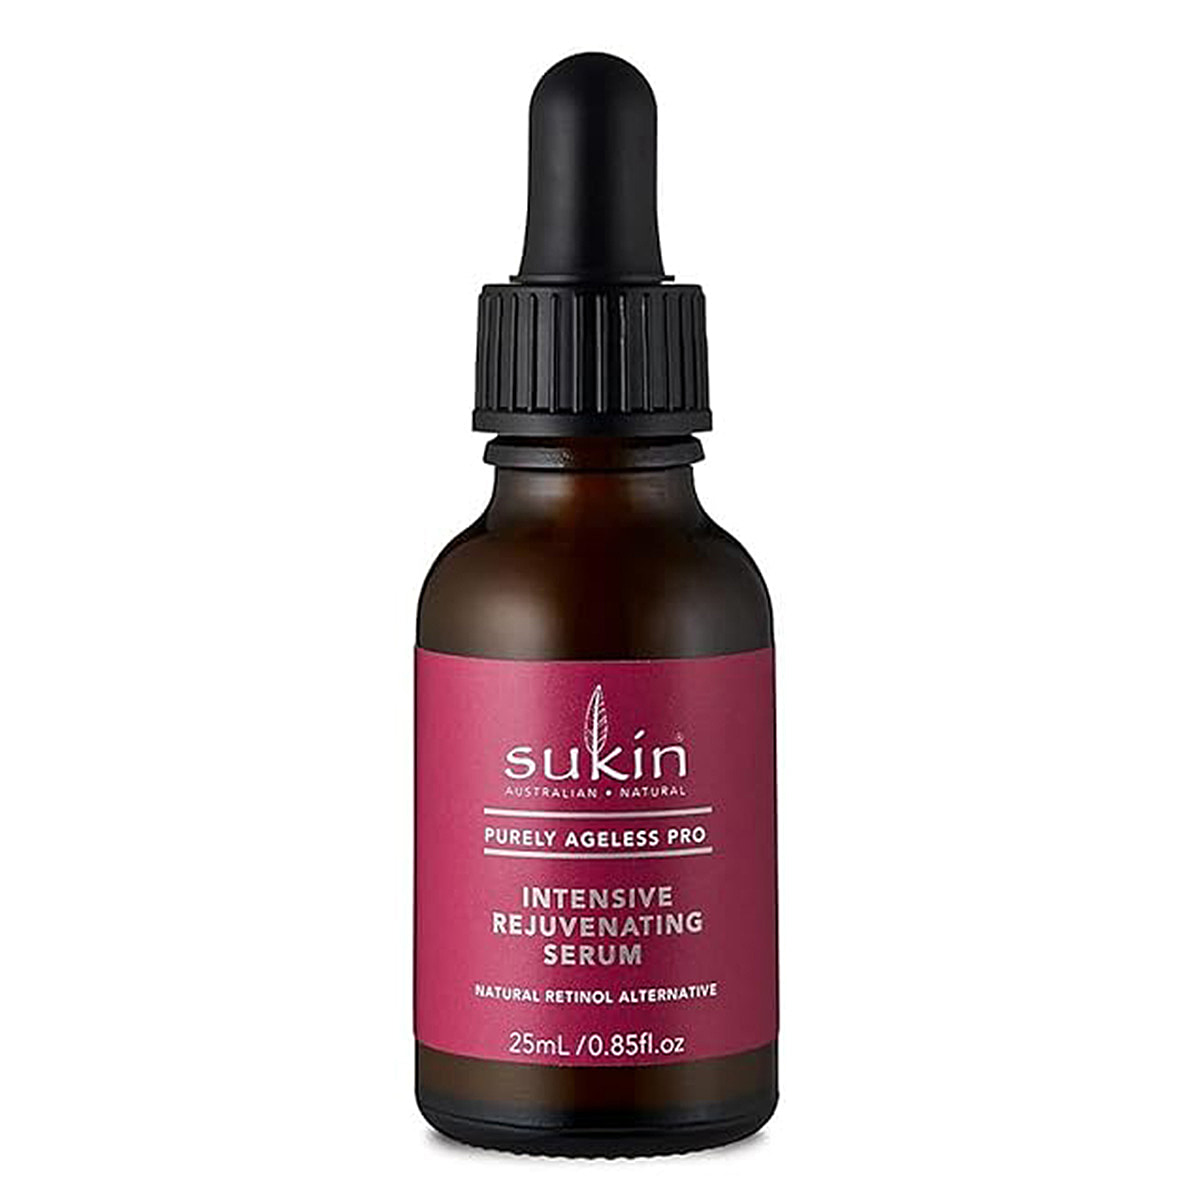 Sukin-Purely Ageless Pro Intensive Rejuvenating Serum 25ml